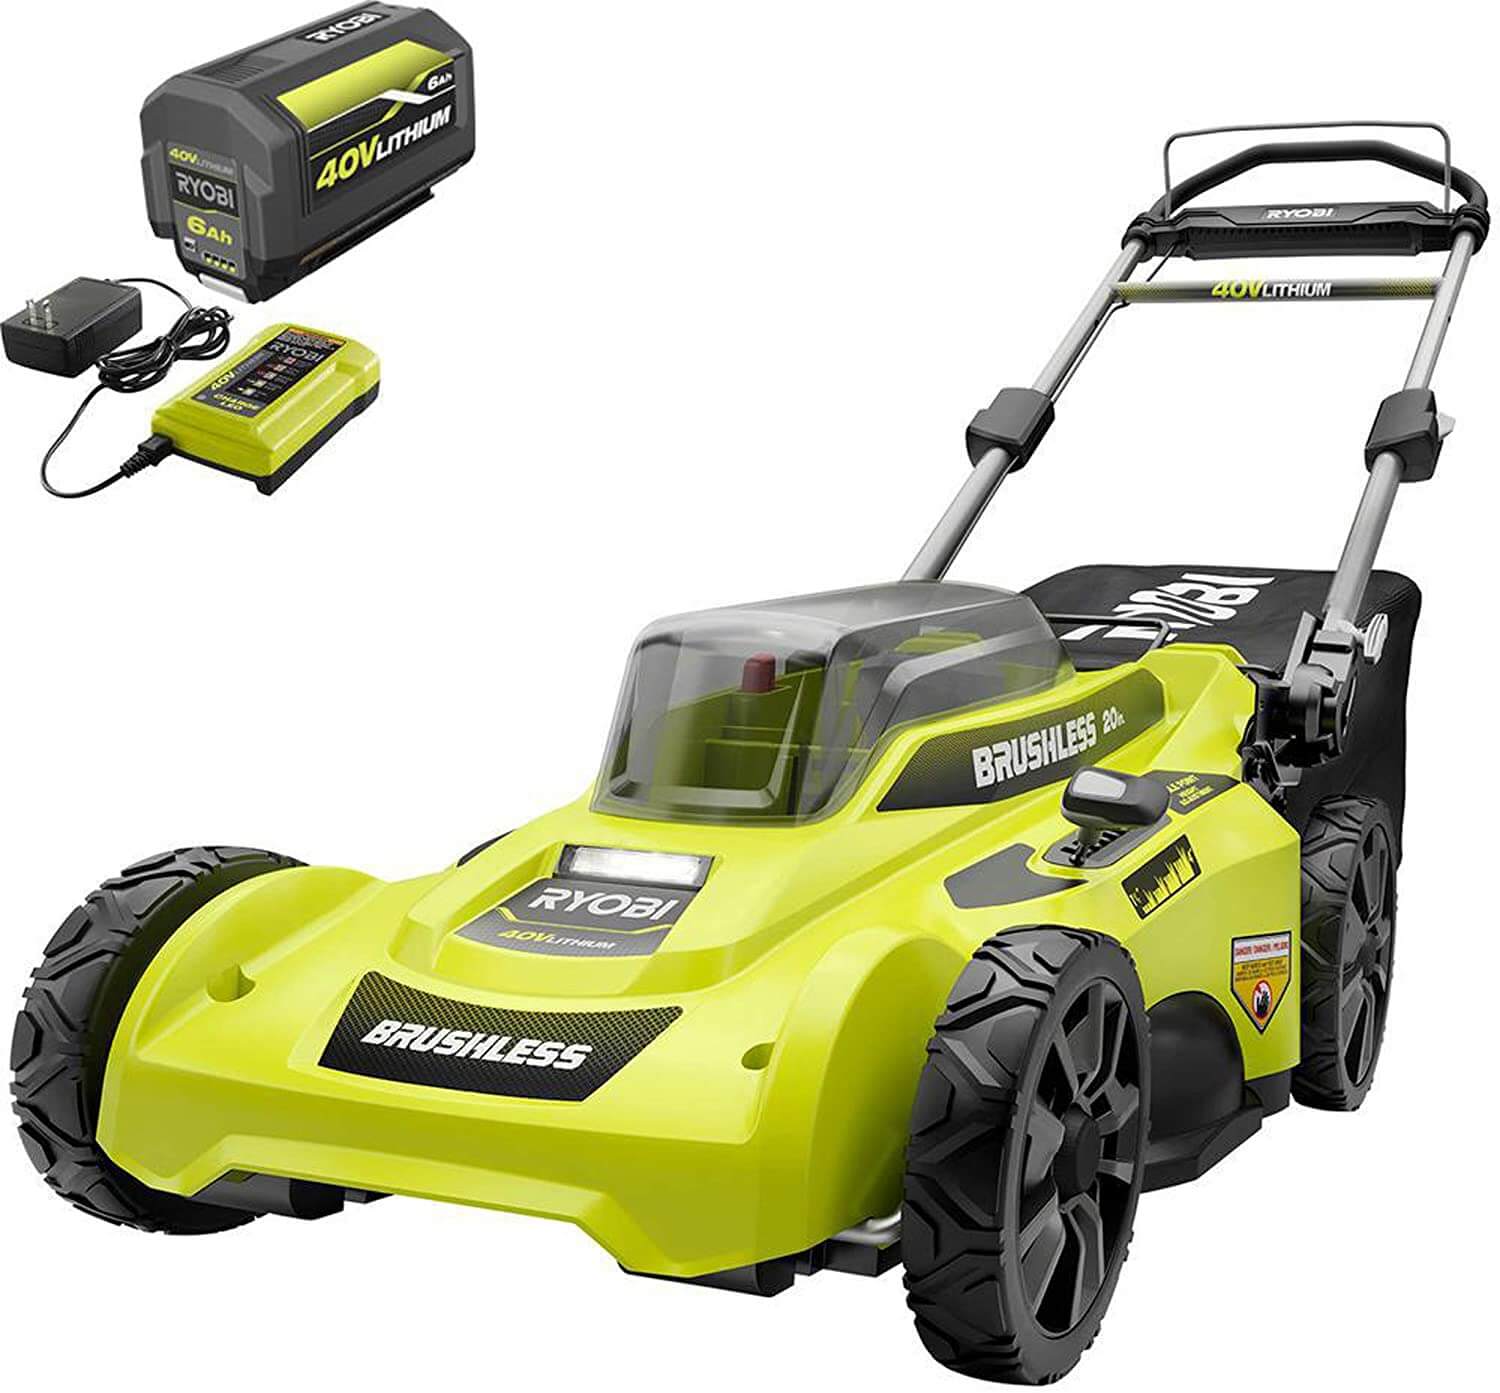 Small-but-mighty Ryobi electric lawnmower